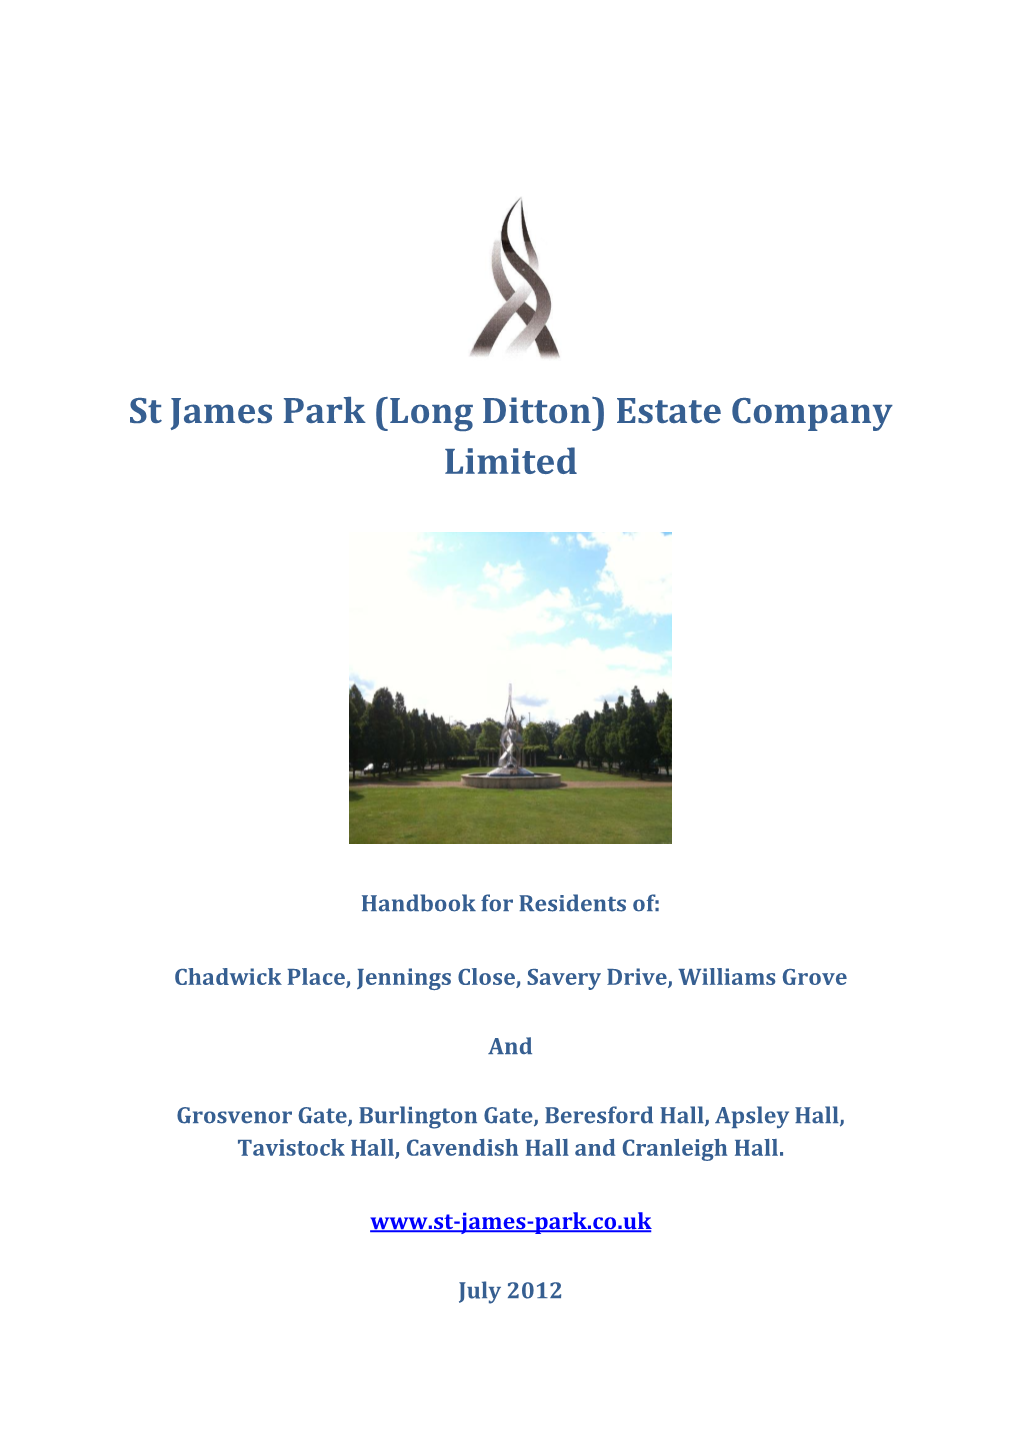 St James Park (Long Ditton) Estate Company Limited